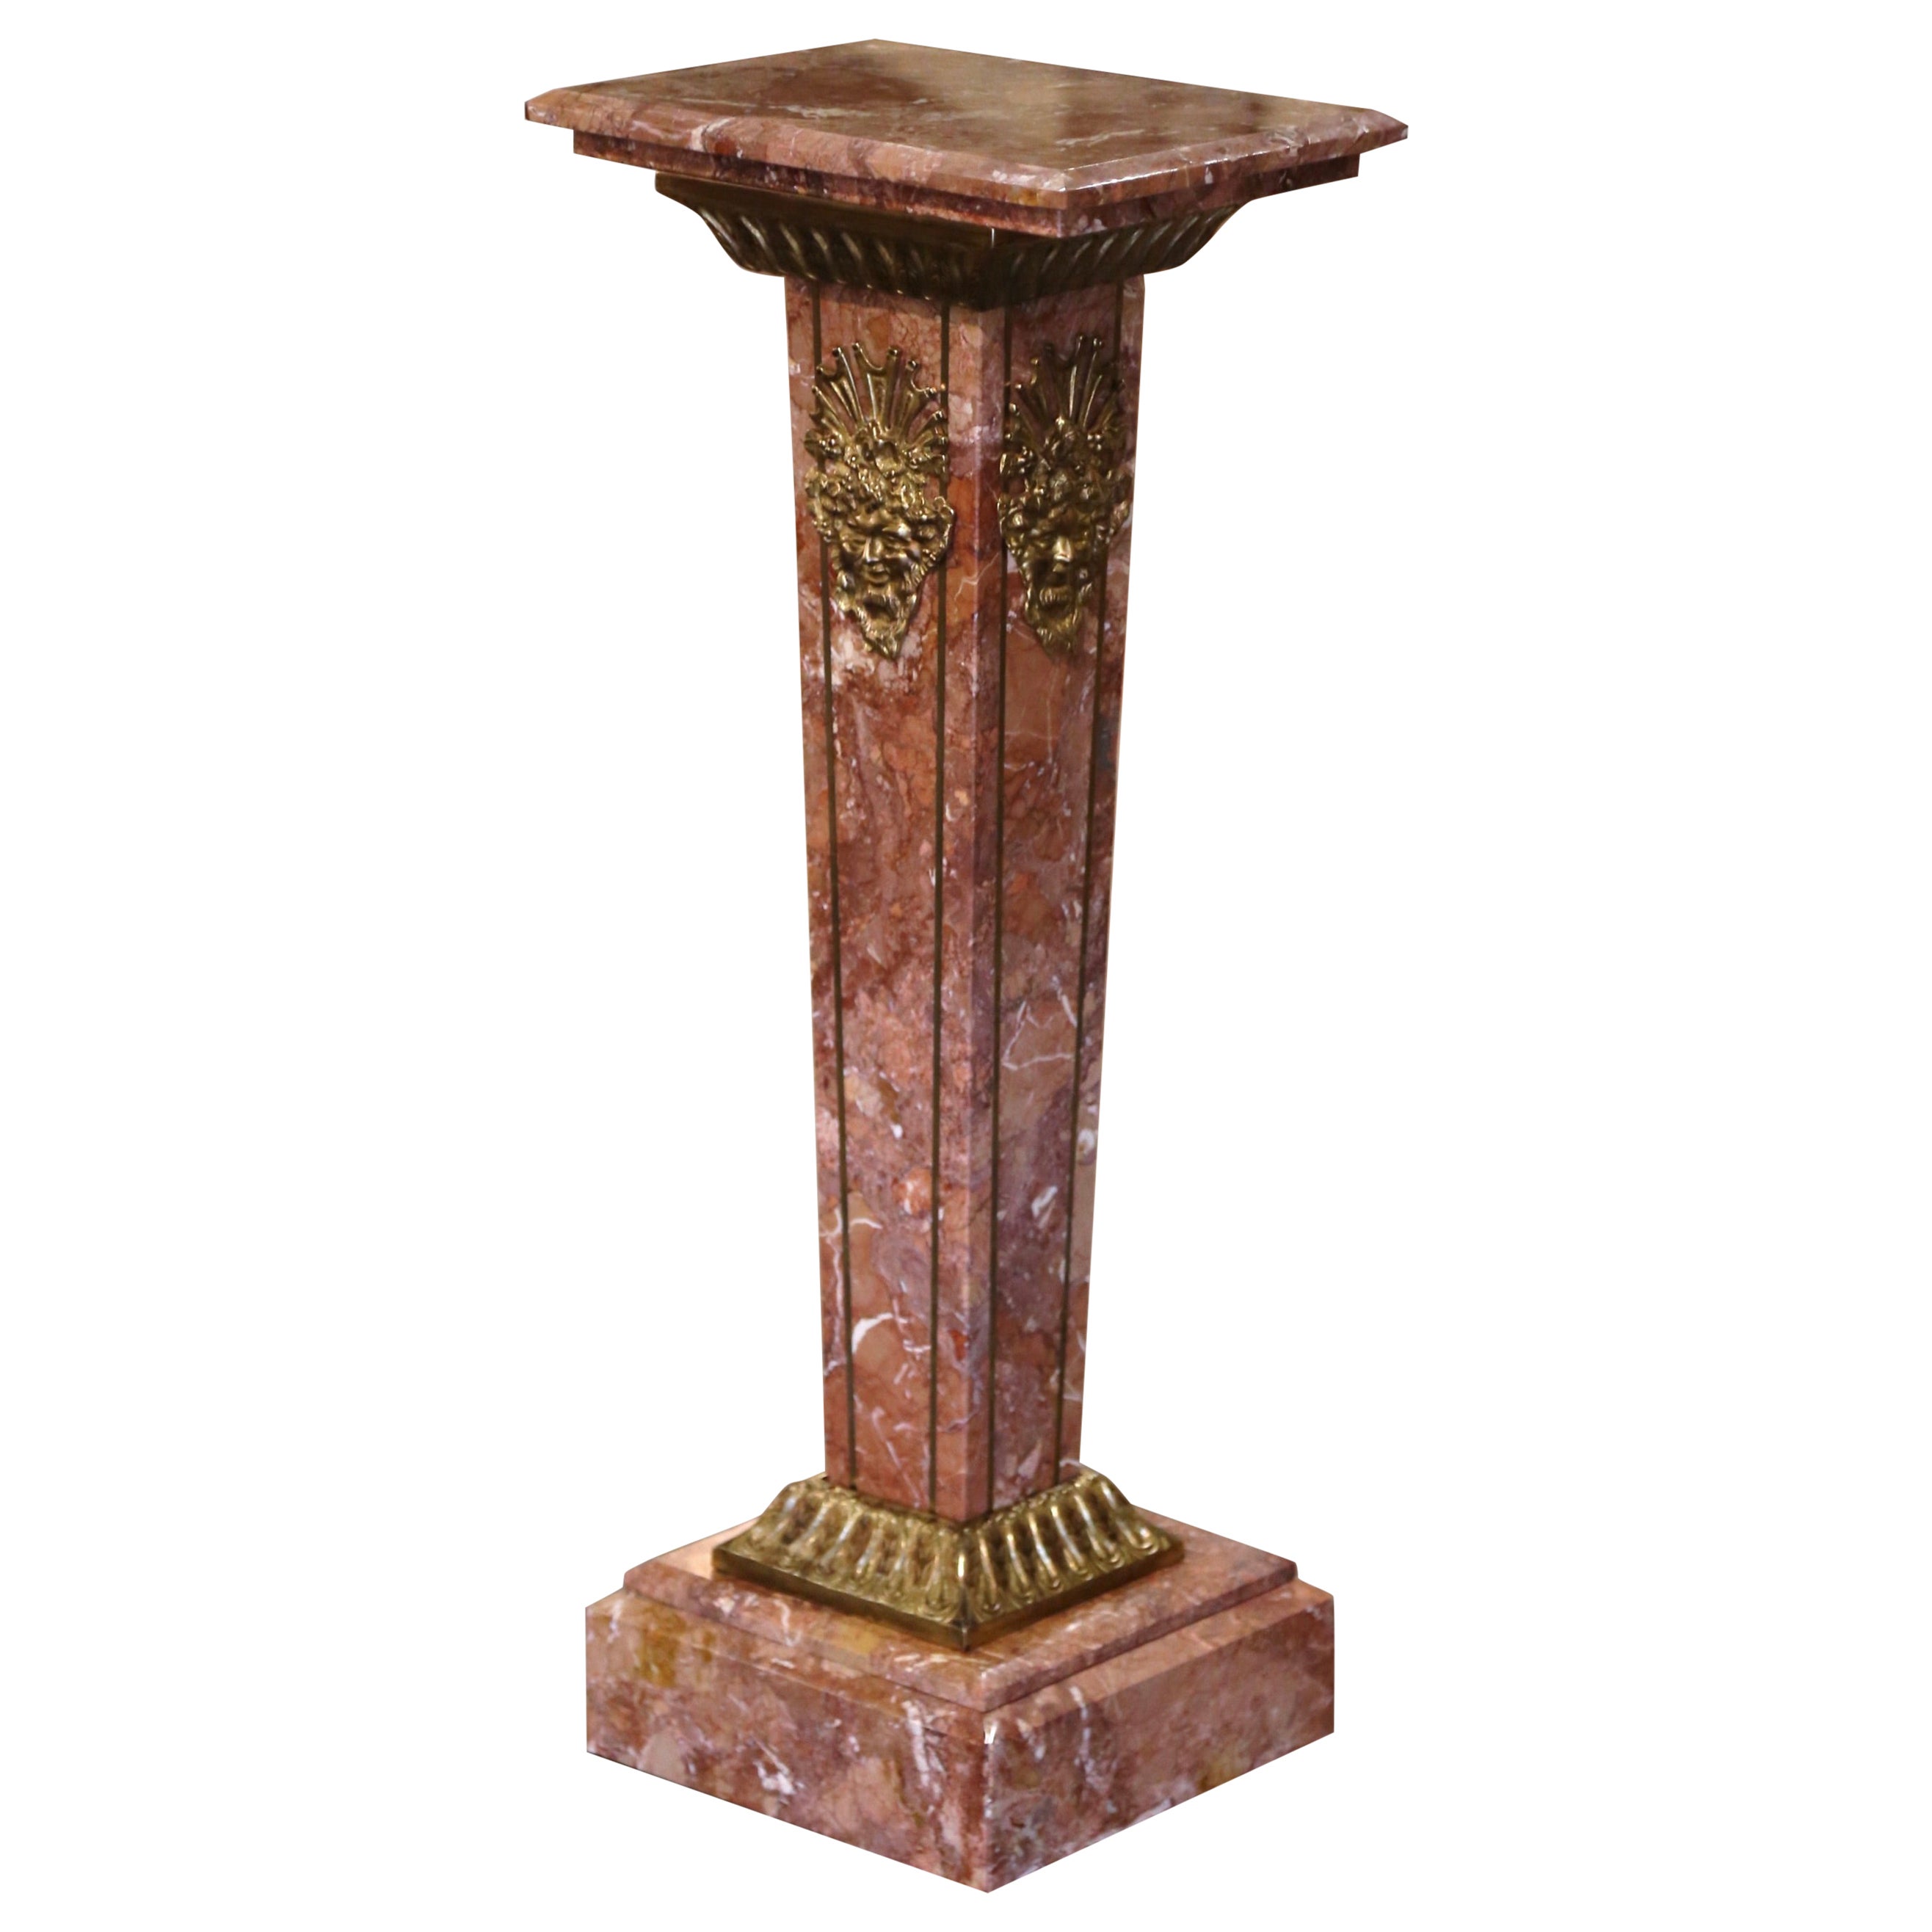 Vintage French Gilt Bronze-Mounted Carved Marble "Selette" Pedestal Table For Sale